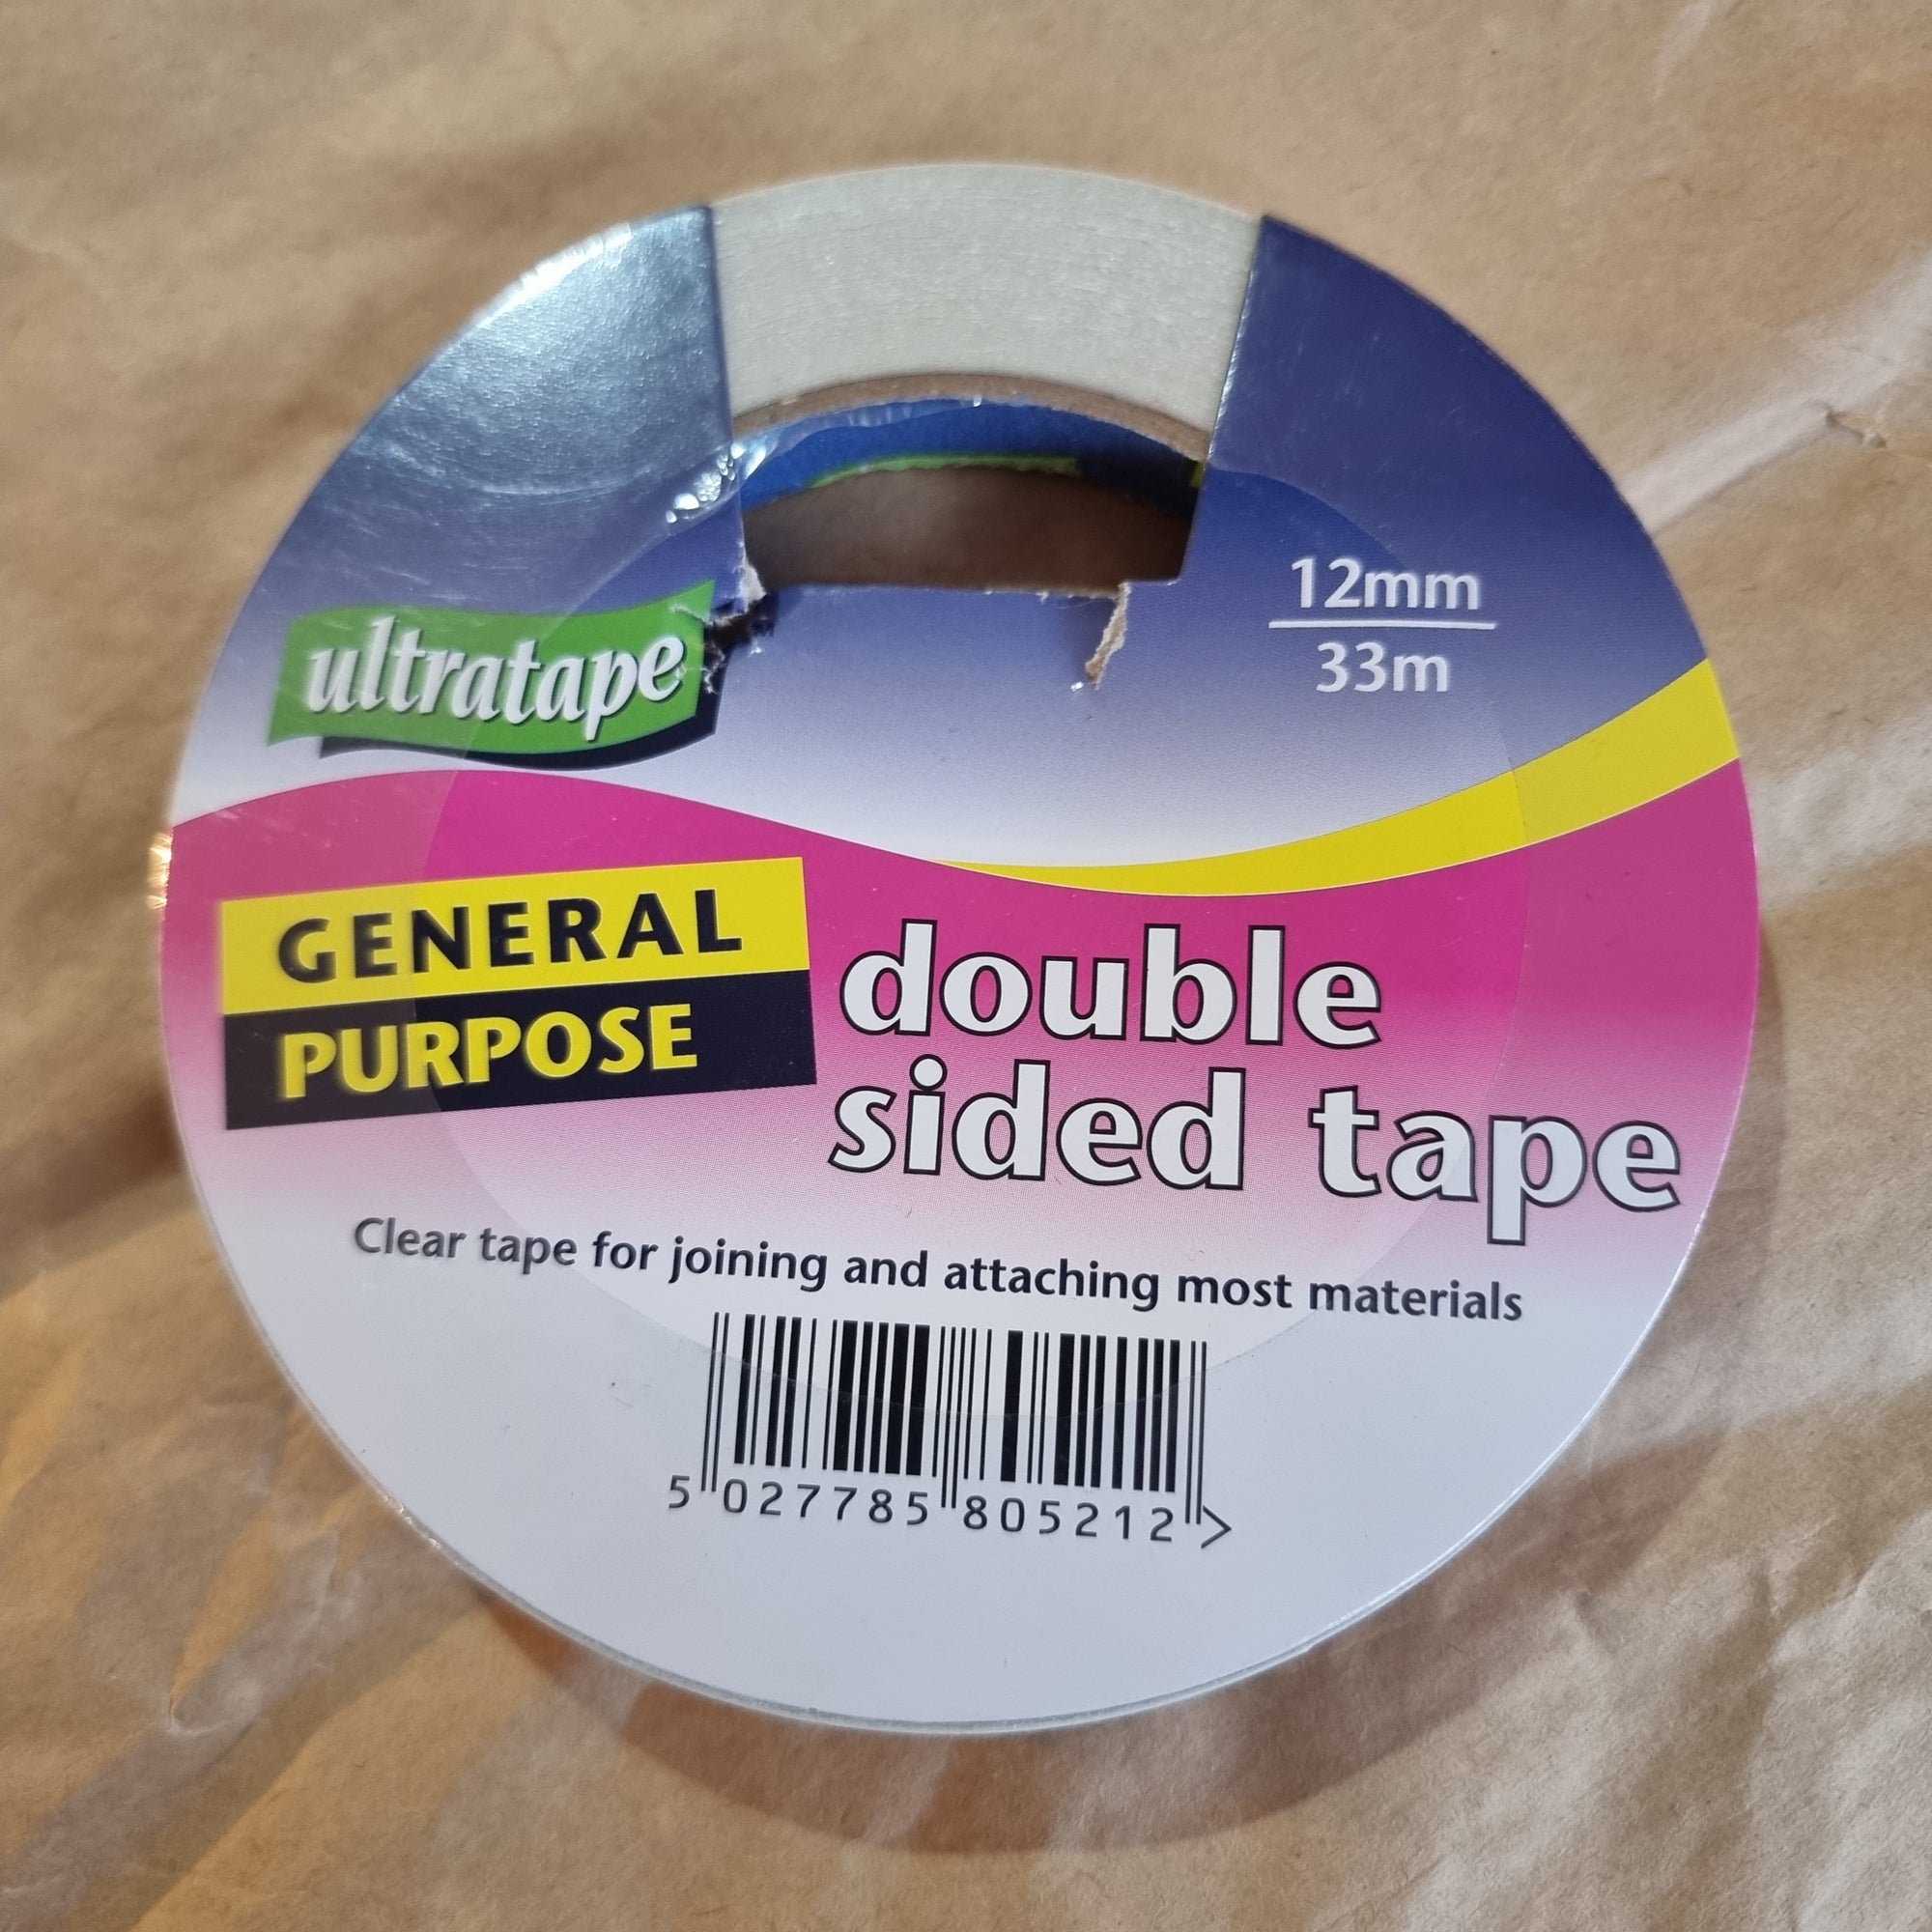 Ultratape General Purpose Double Sided Tape